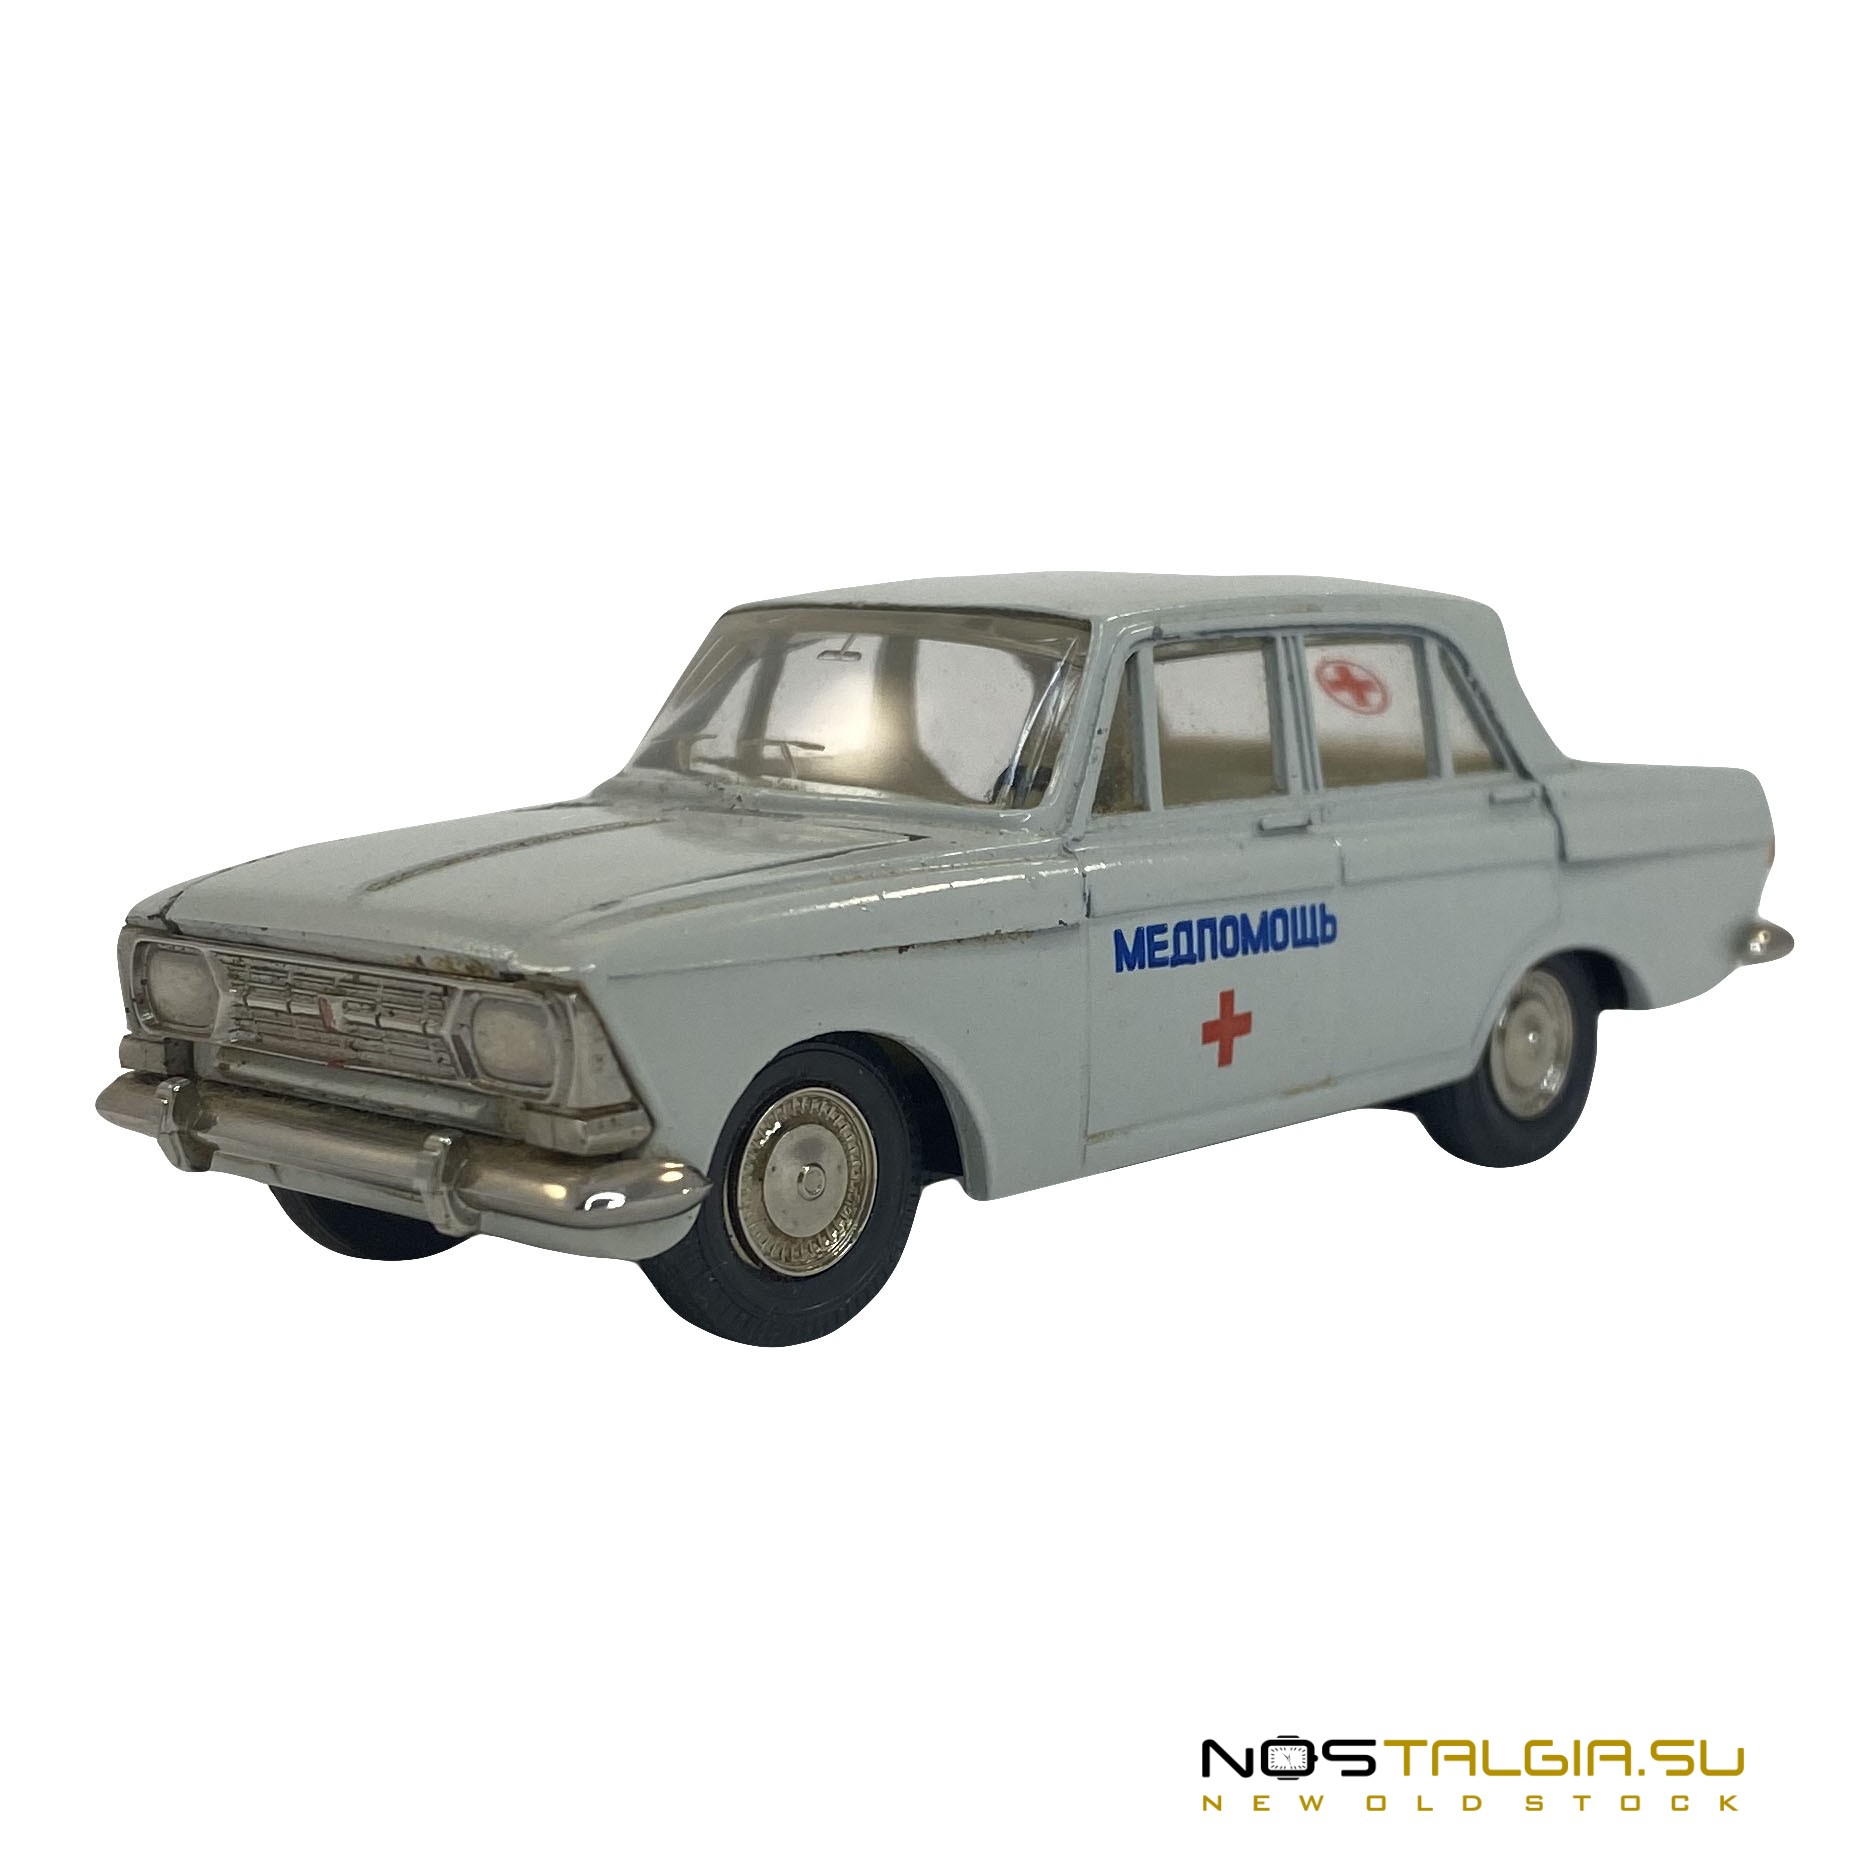 Точная копия автомобиля "Москвич 408" Медпомощь, производство СССР, масштаб 1:43, с хранения